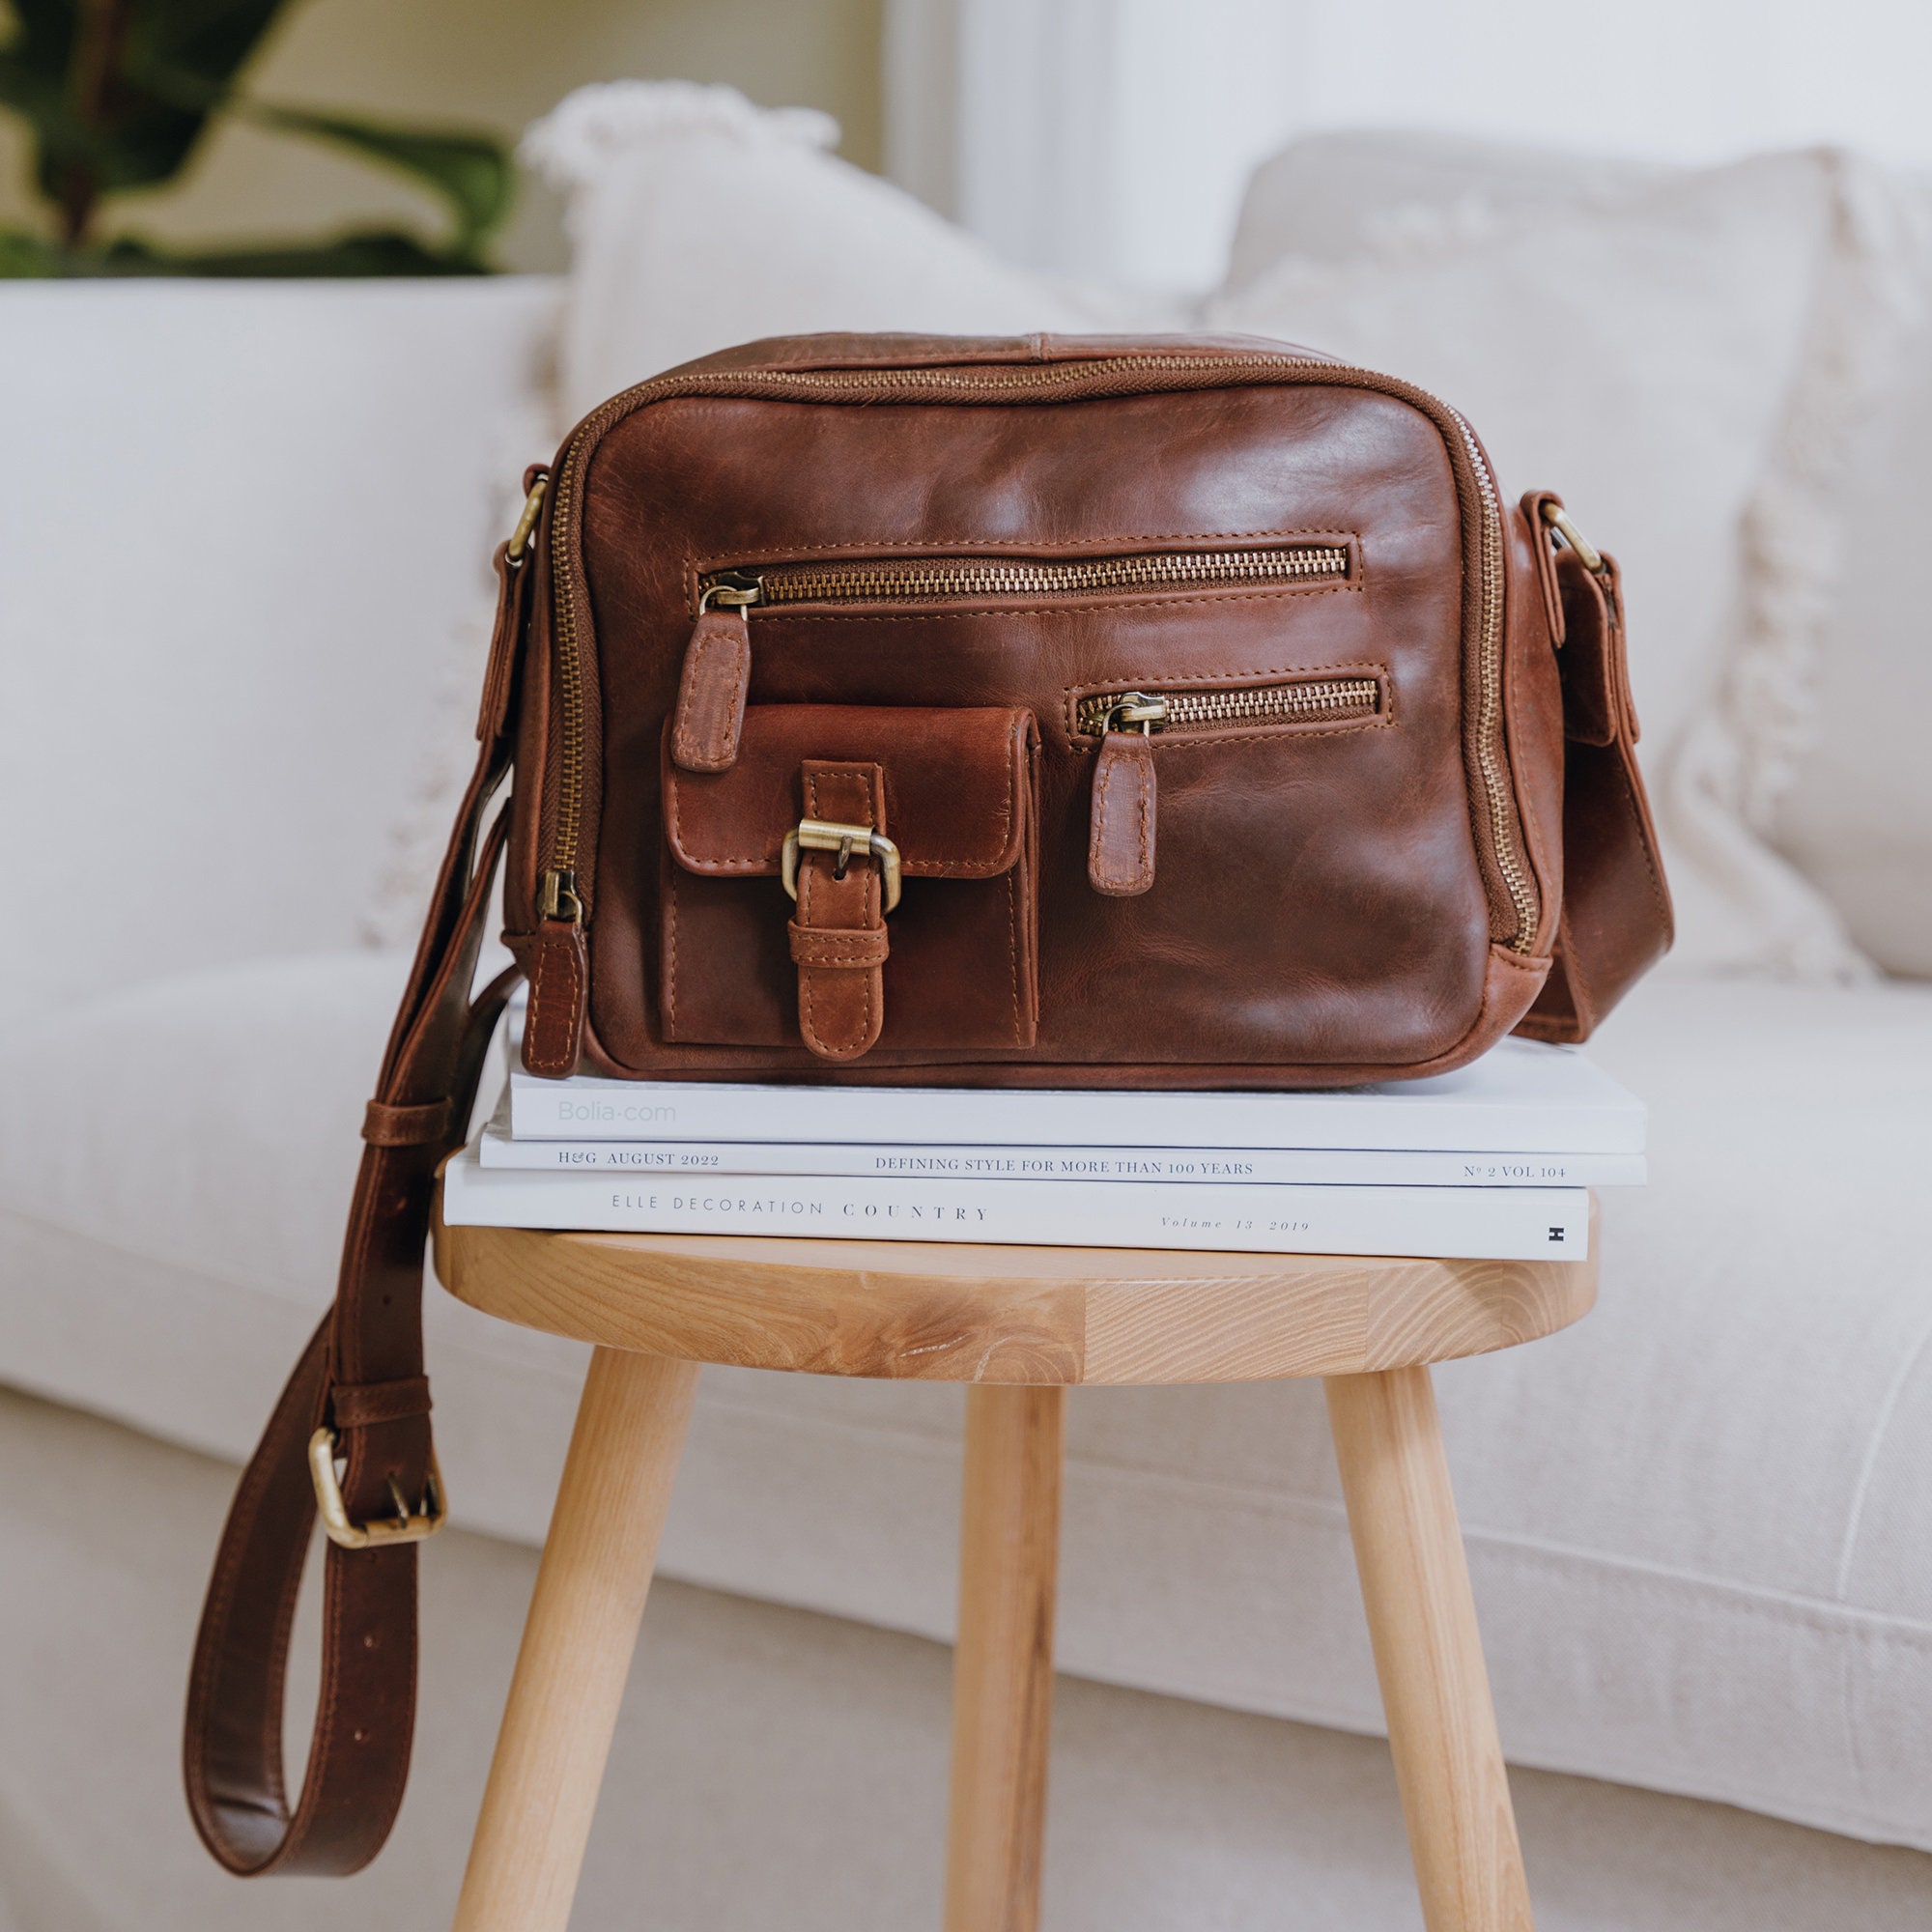 Augus Leather Small Messenger Bag For Men Crossbody Handbag Shoulder Sling  Travel Bags for Men Purse Daypack Magnetic Buckle